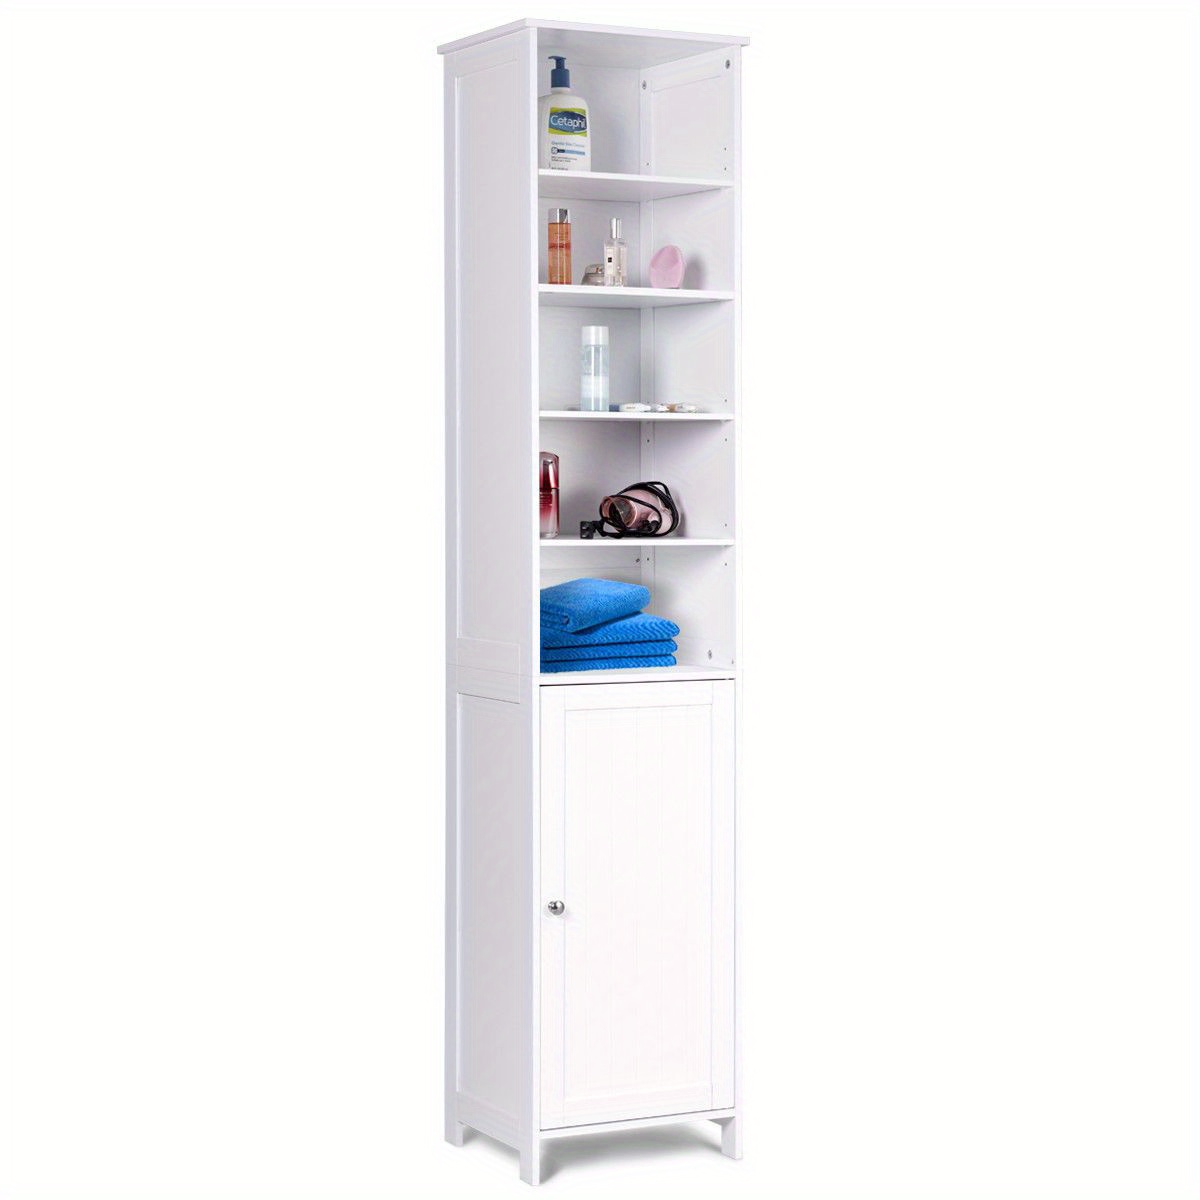 

Giantex 72" Bathroom Tall Floor Storage Cabinet Freestand Shelving Display White